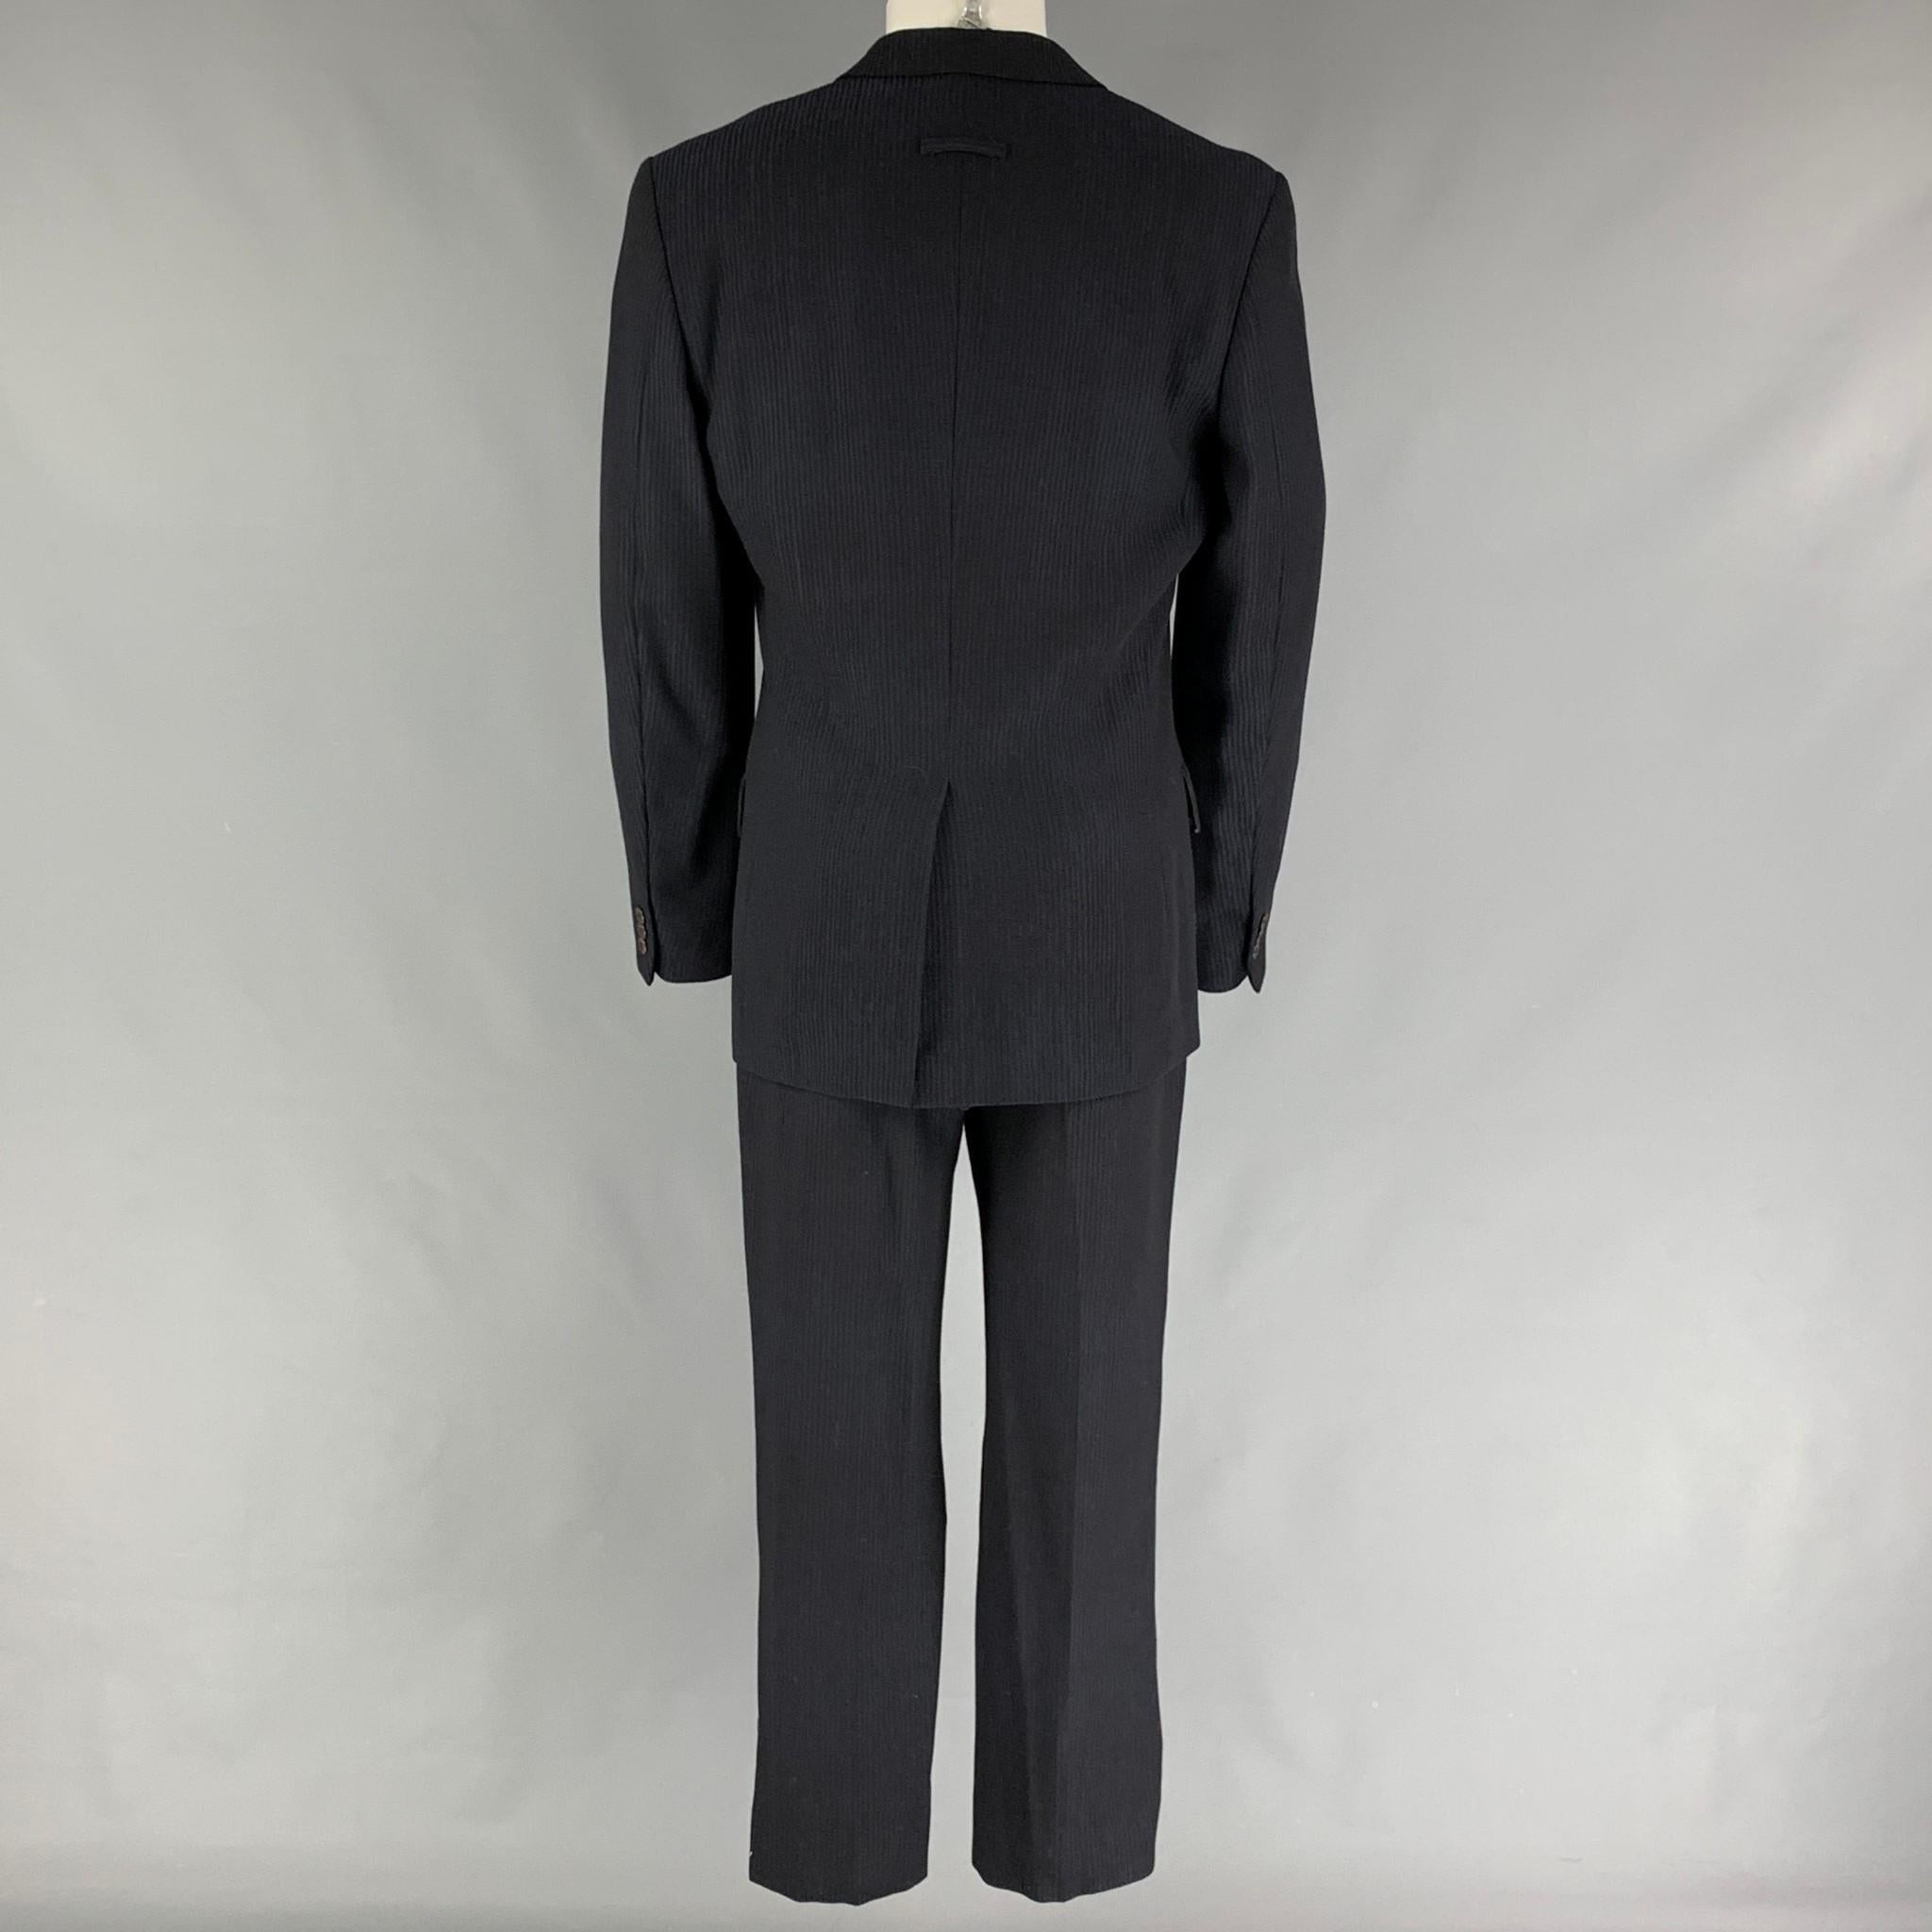 gaultier suit